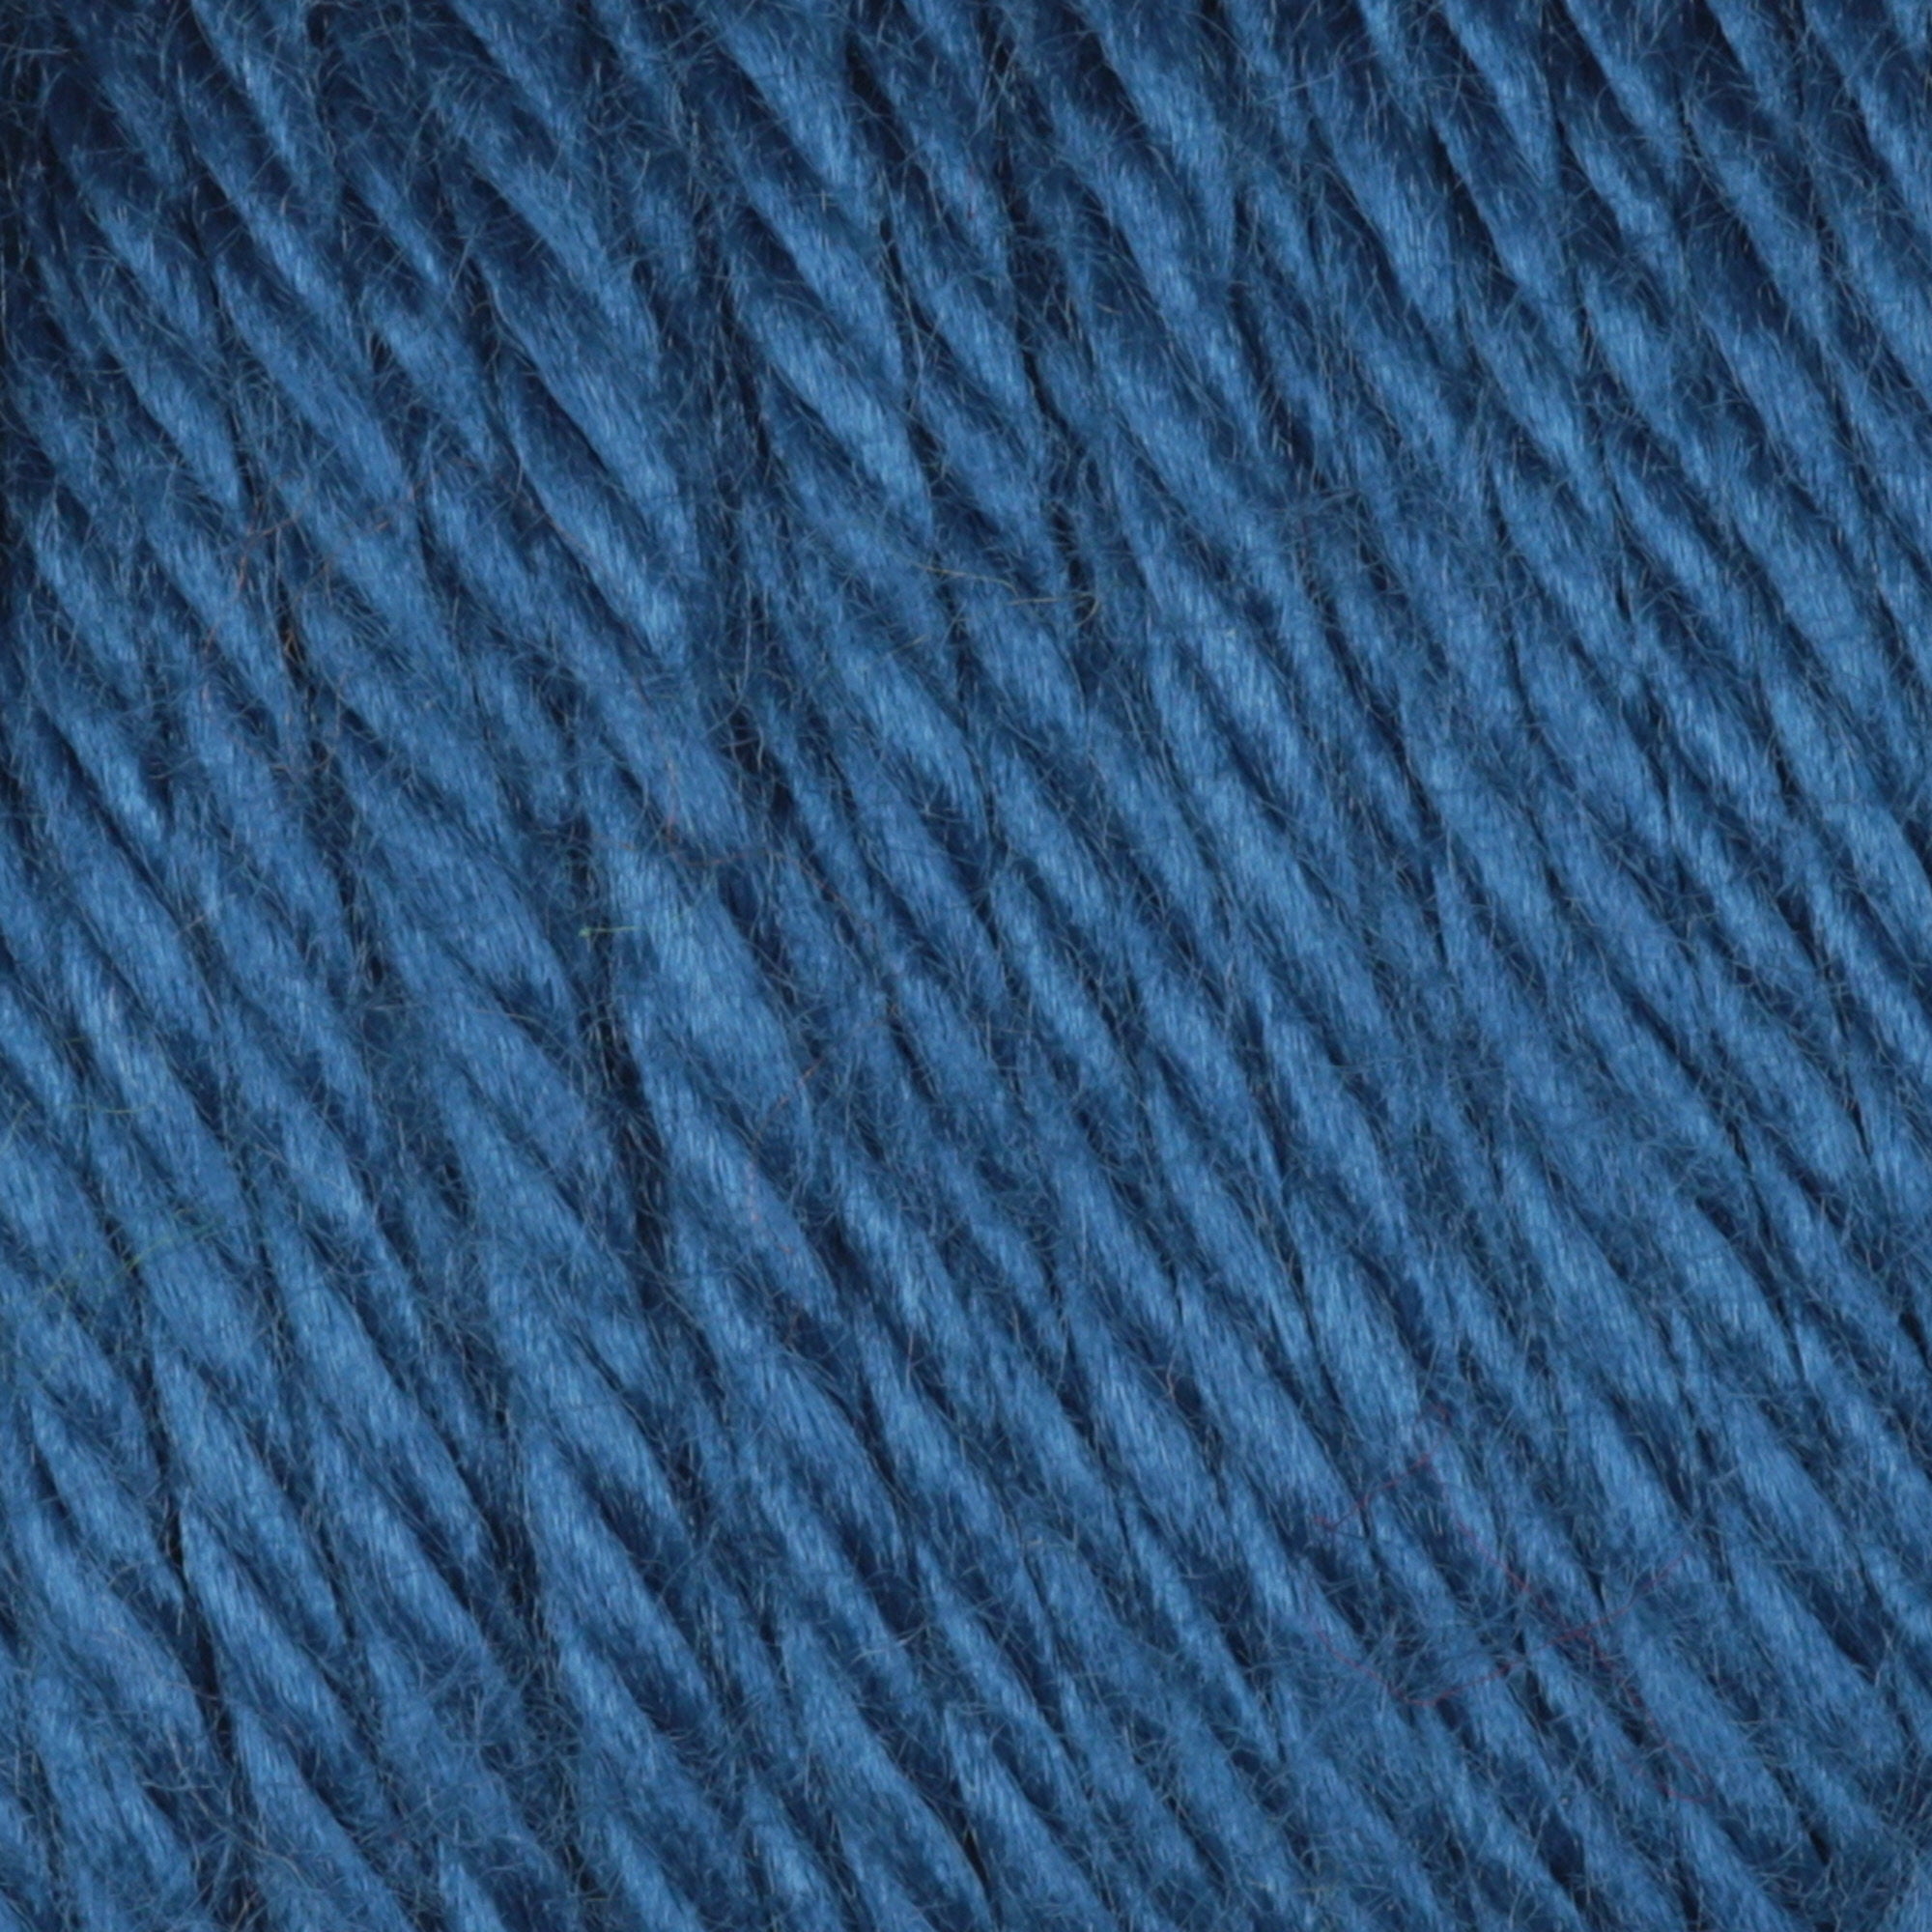 Caron Simply Soft Ocean Yarn - 3 Pack of 170g/6oz - Acrylic - 4 Medium (Worsted) - 315 Yards - Knitting, Crocheting & Crafts